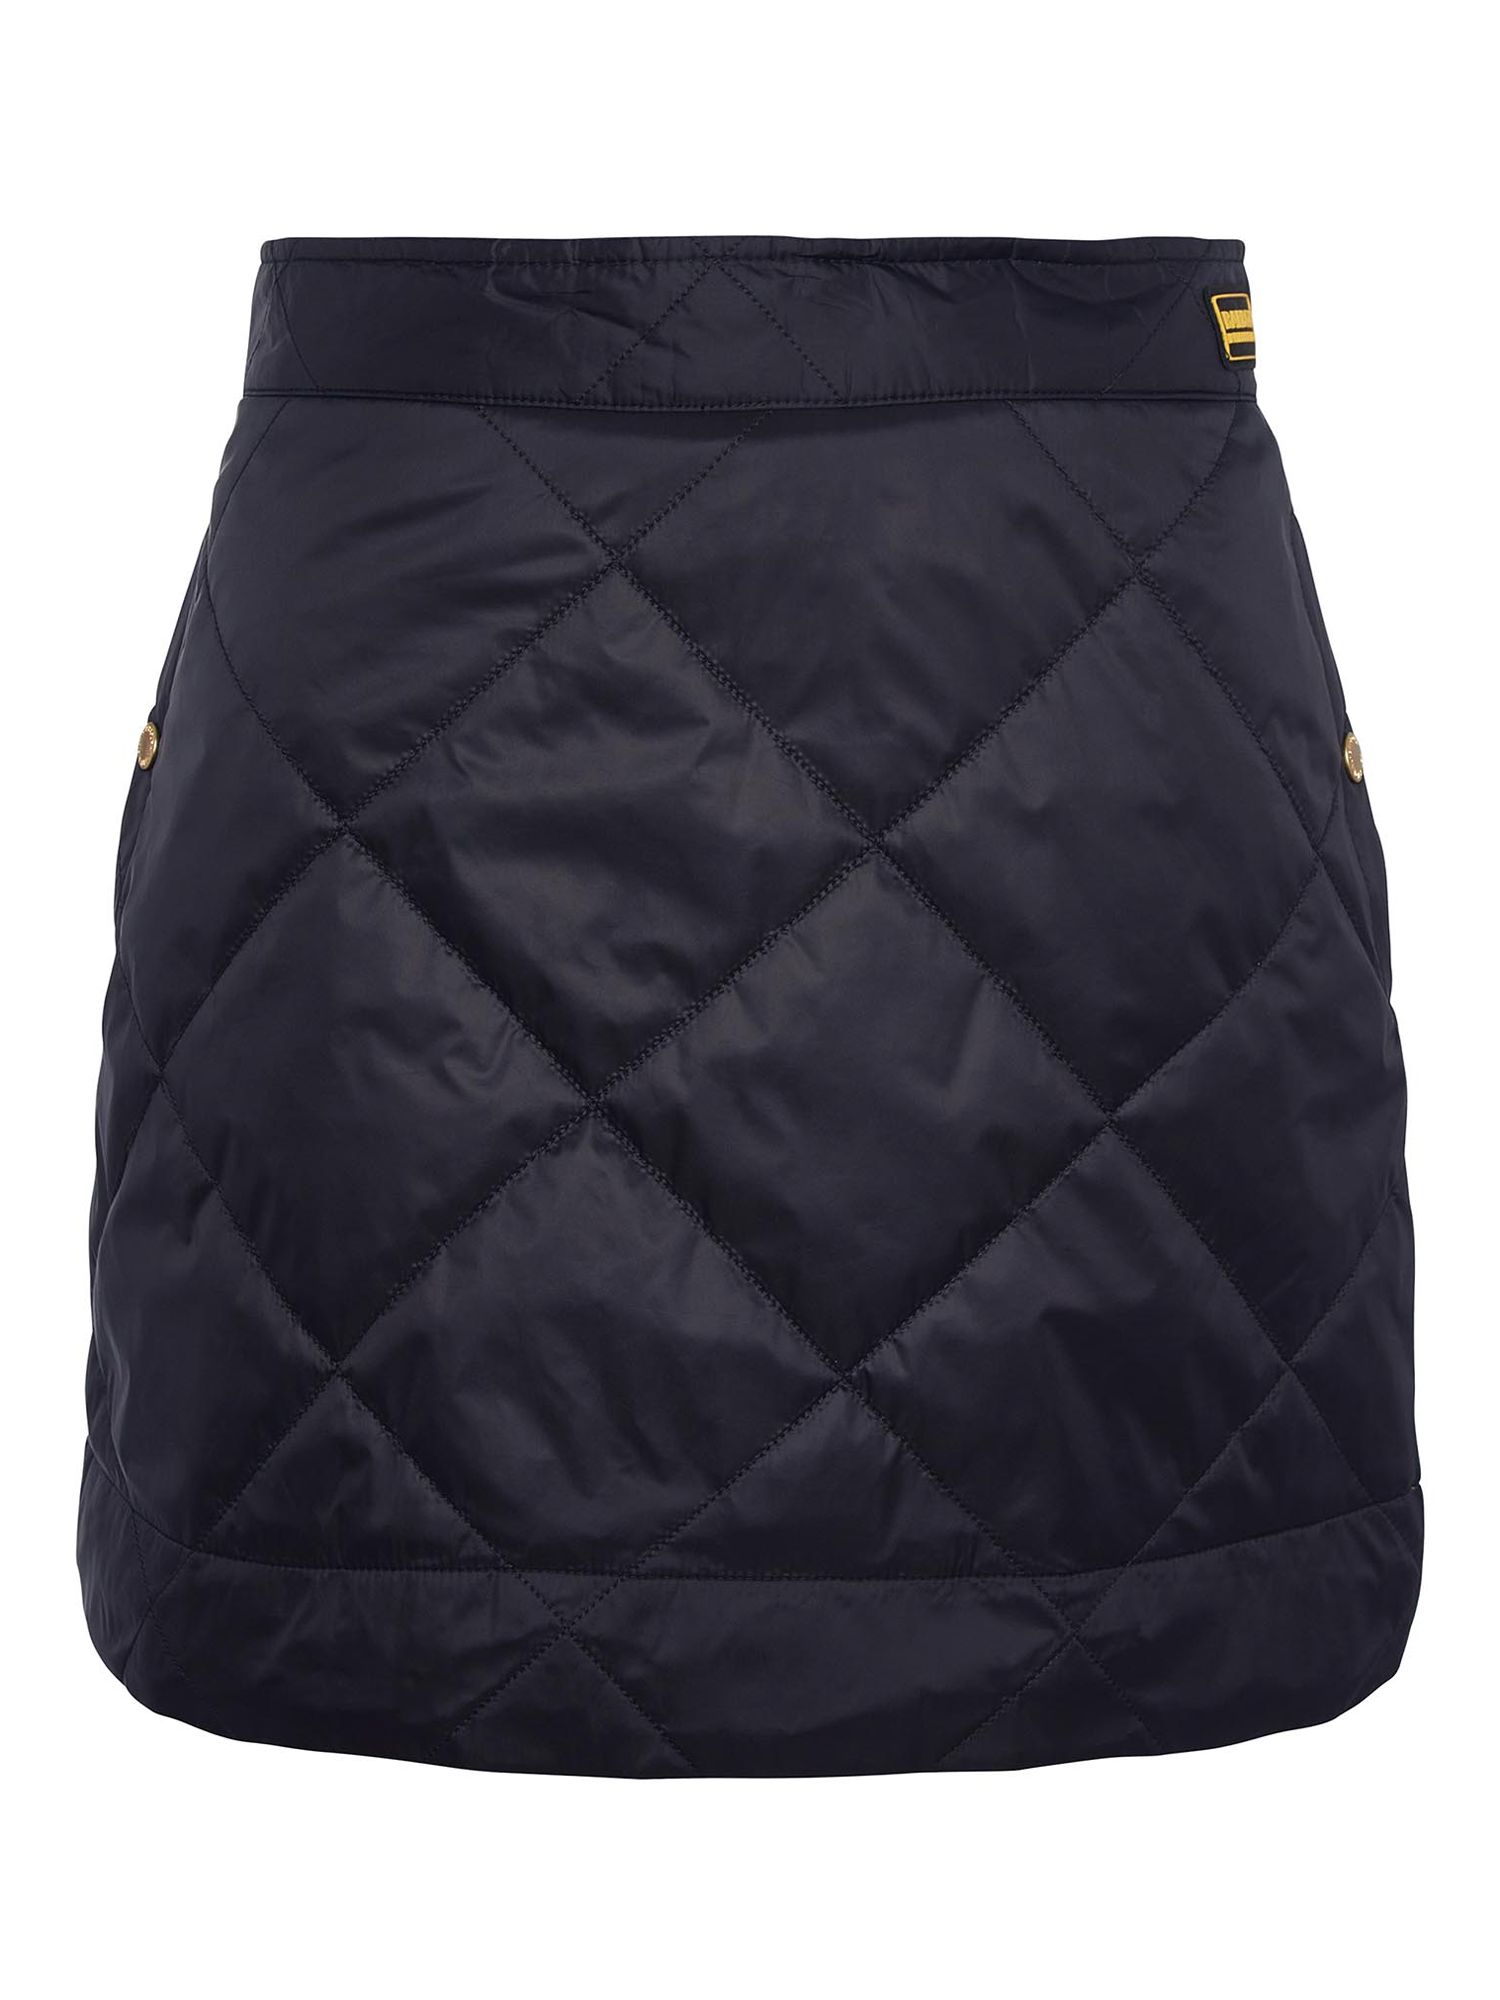 Buy Barbour International Comet Diamond Quilted Mini Skirt, Black Online at johnlewis.com